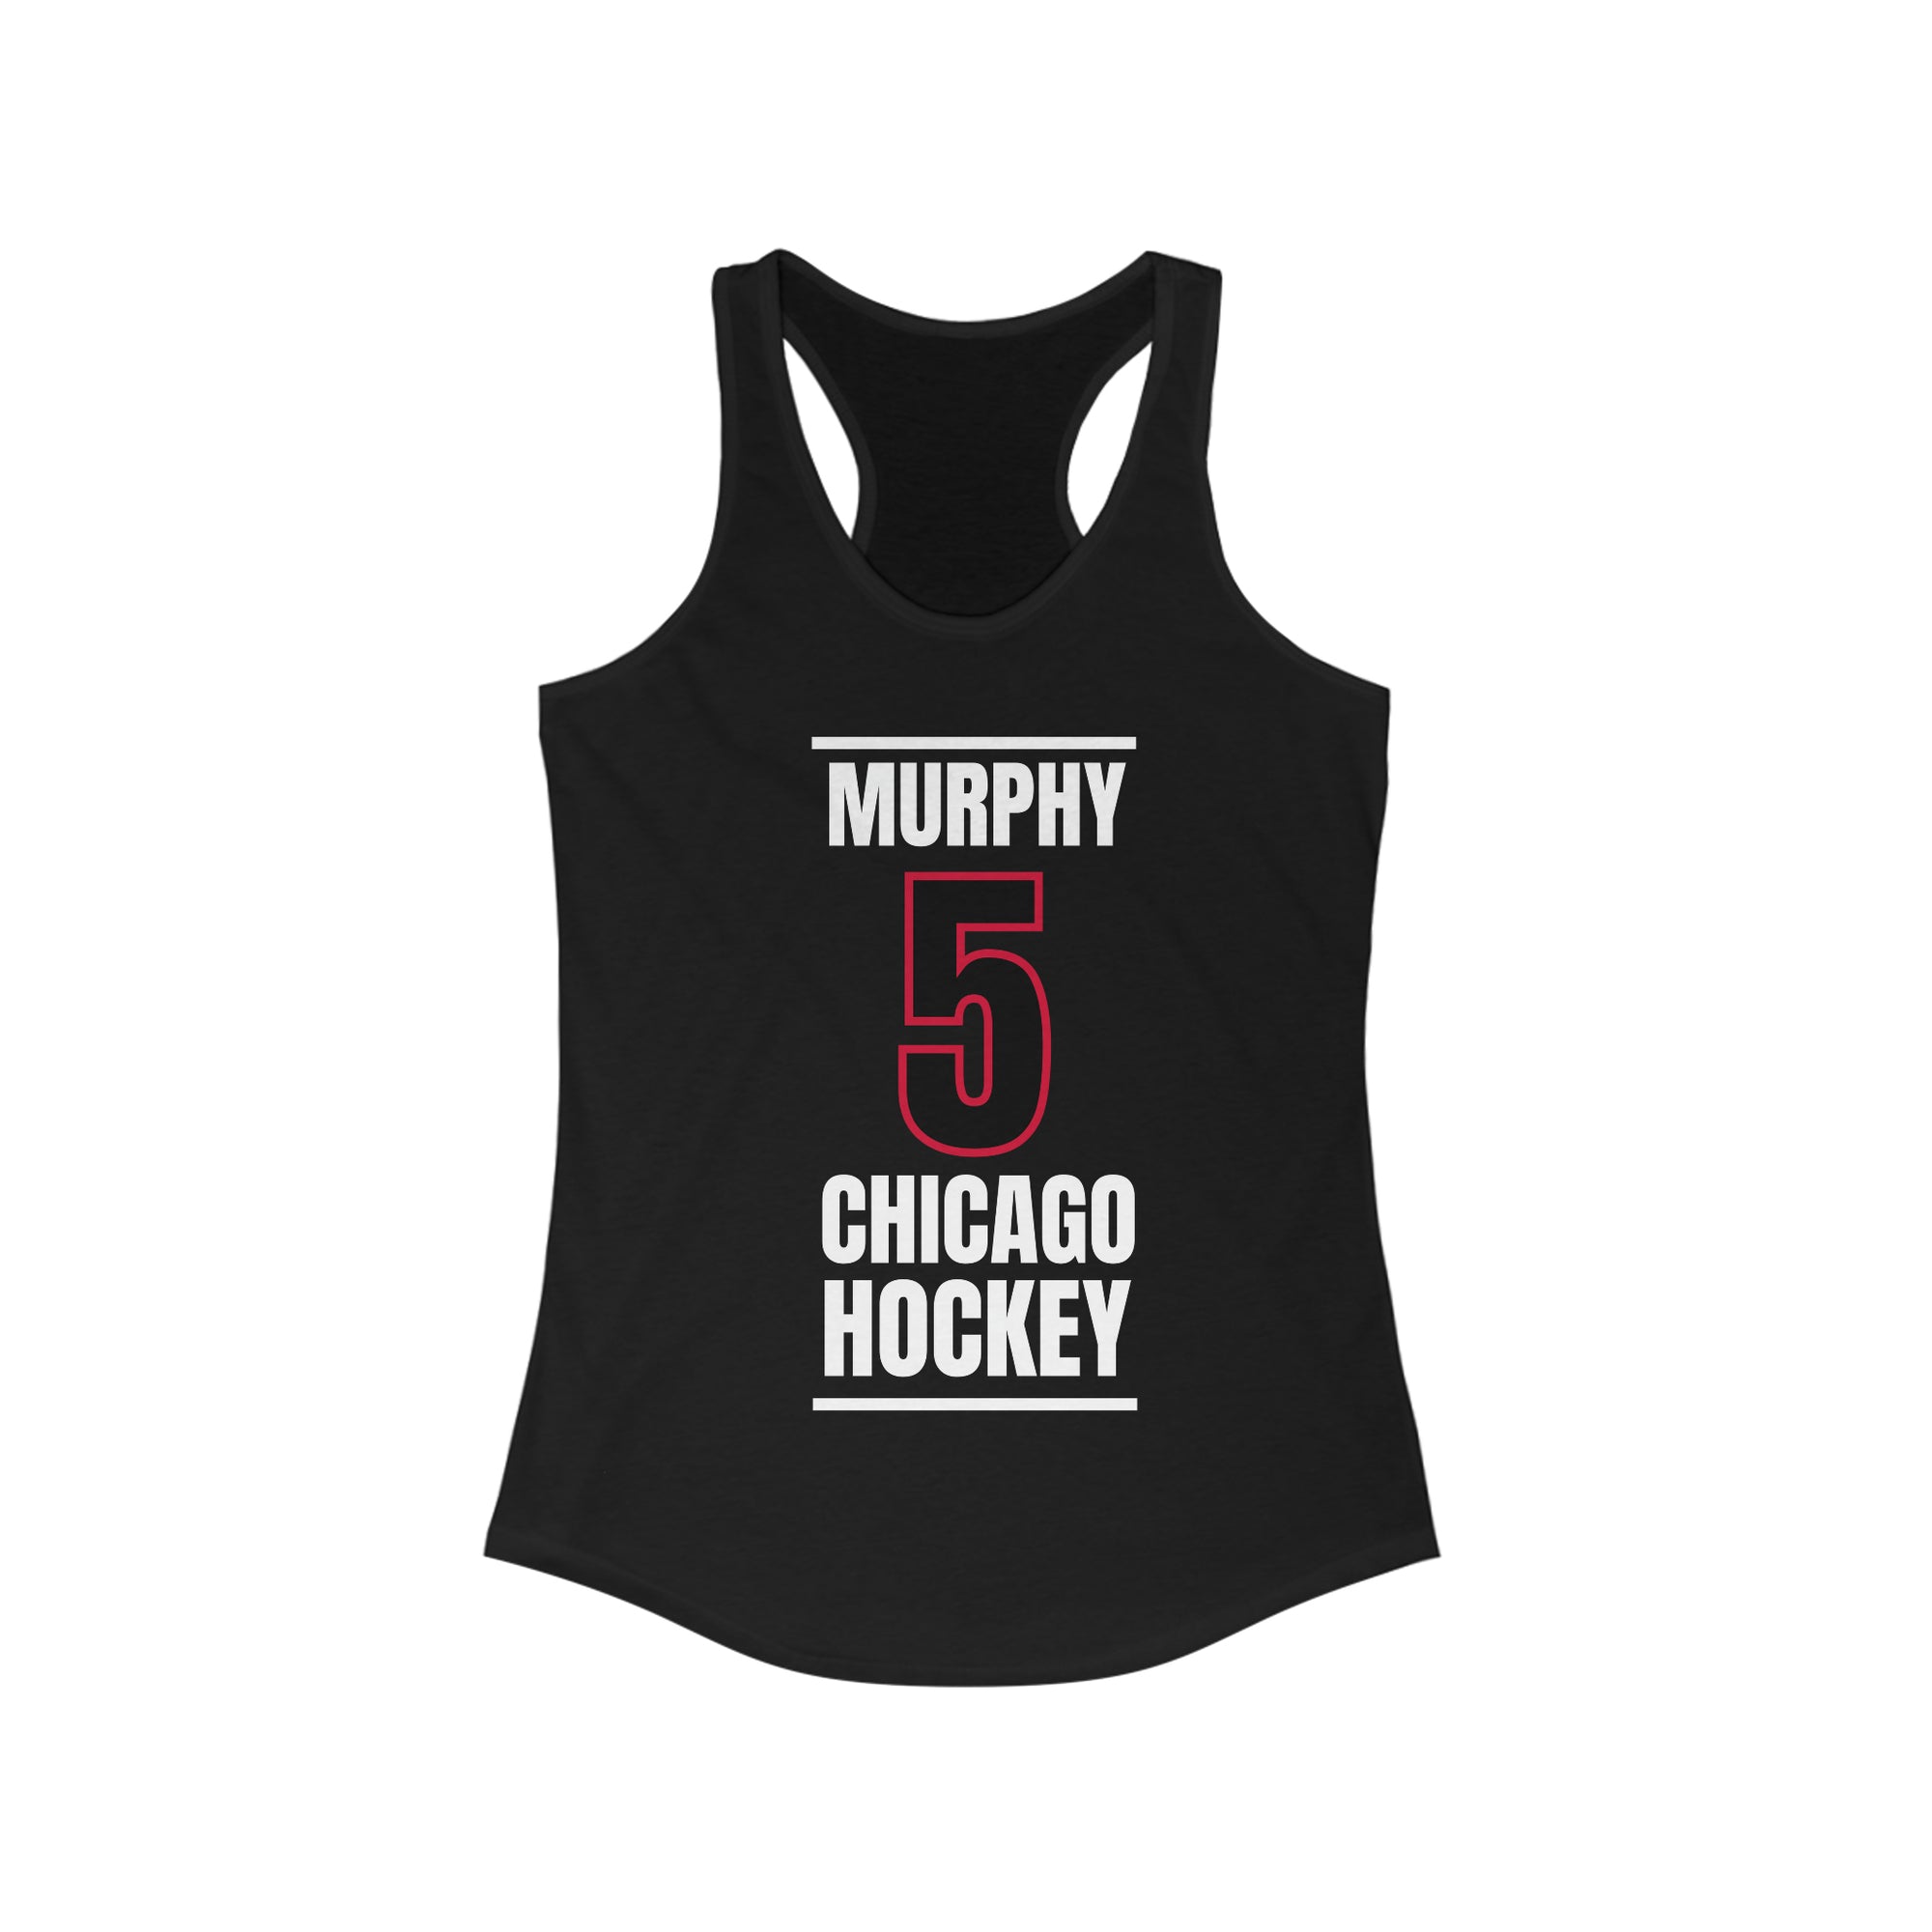 Murphy 5 Chicago Hockey Black Vertical Design Women's Ideal Racerback Tank Top